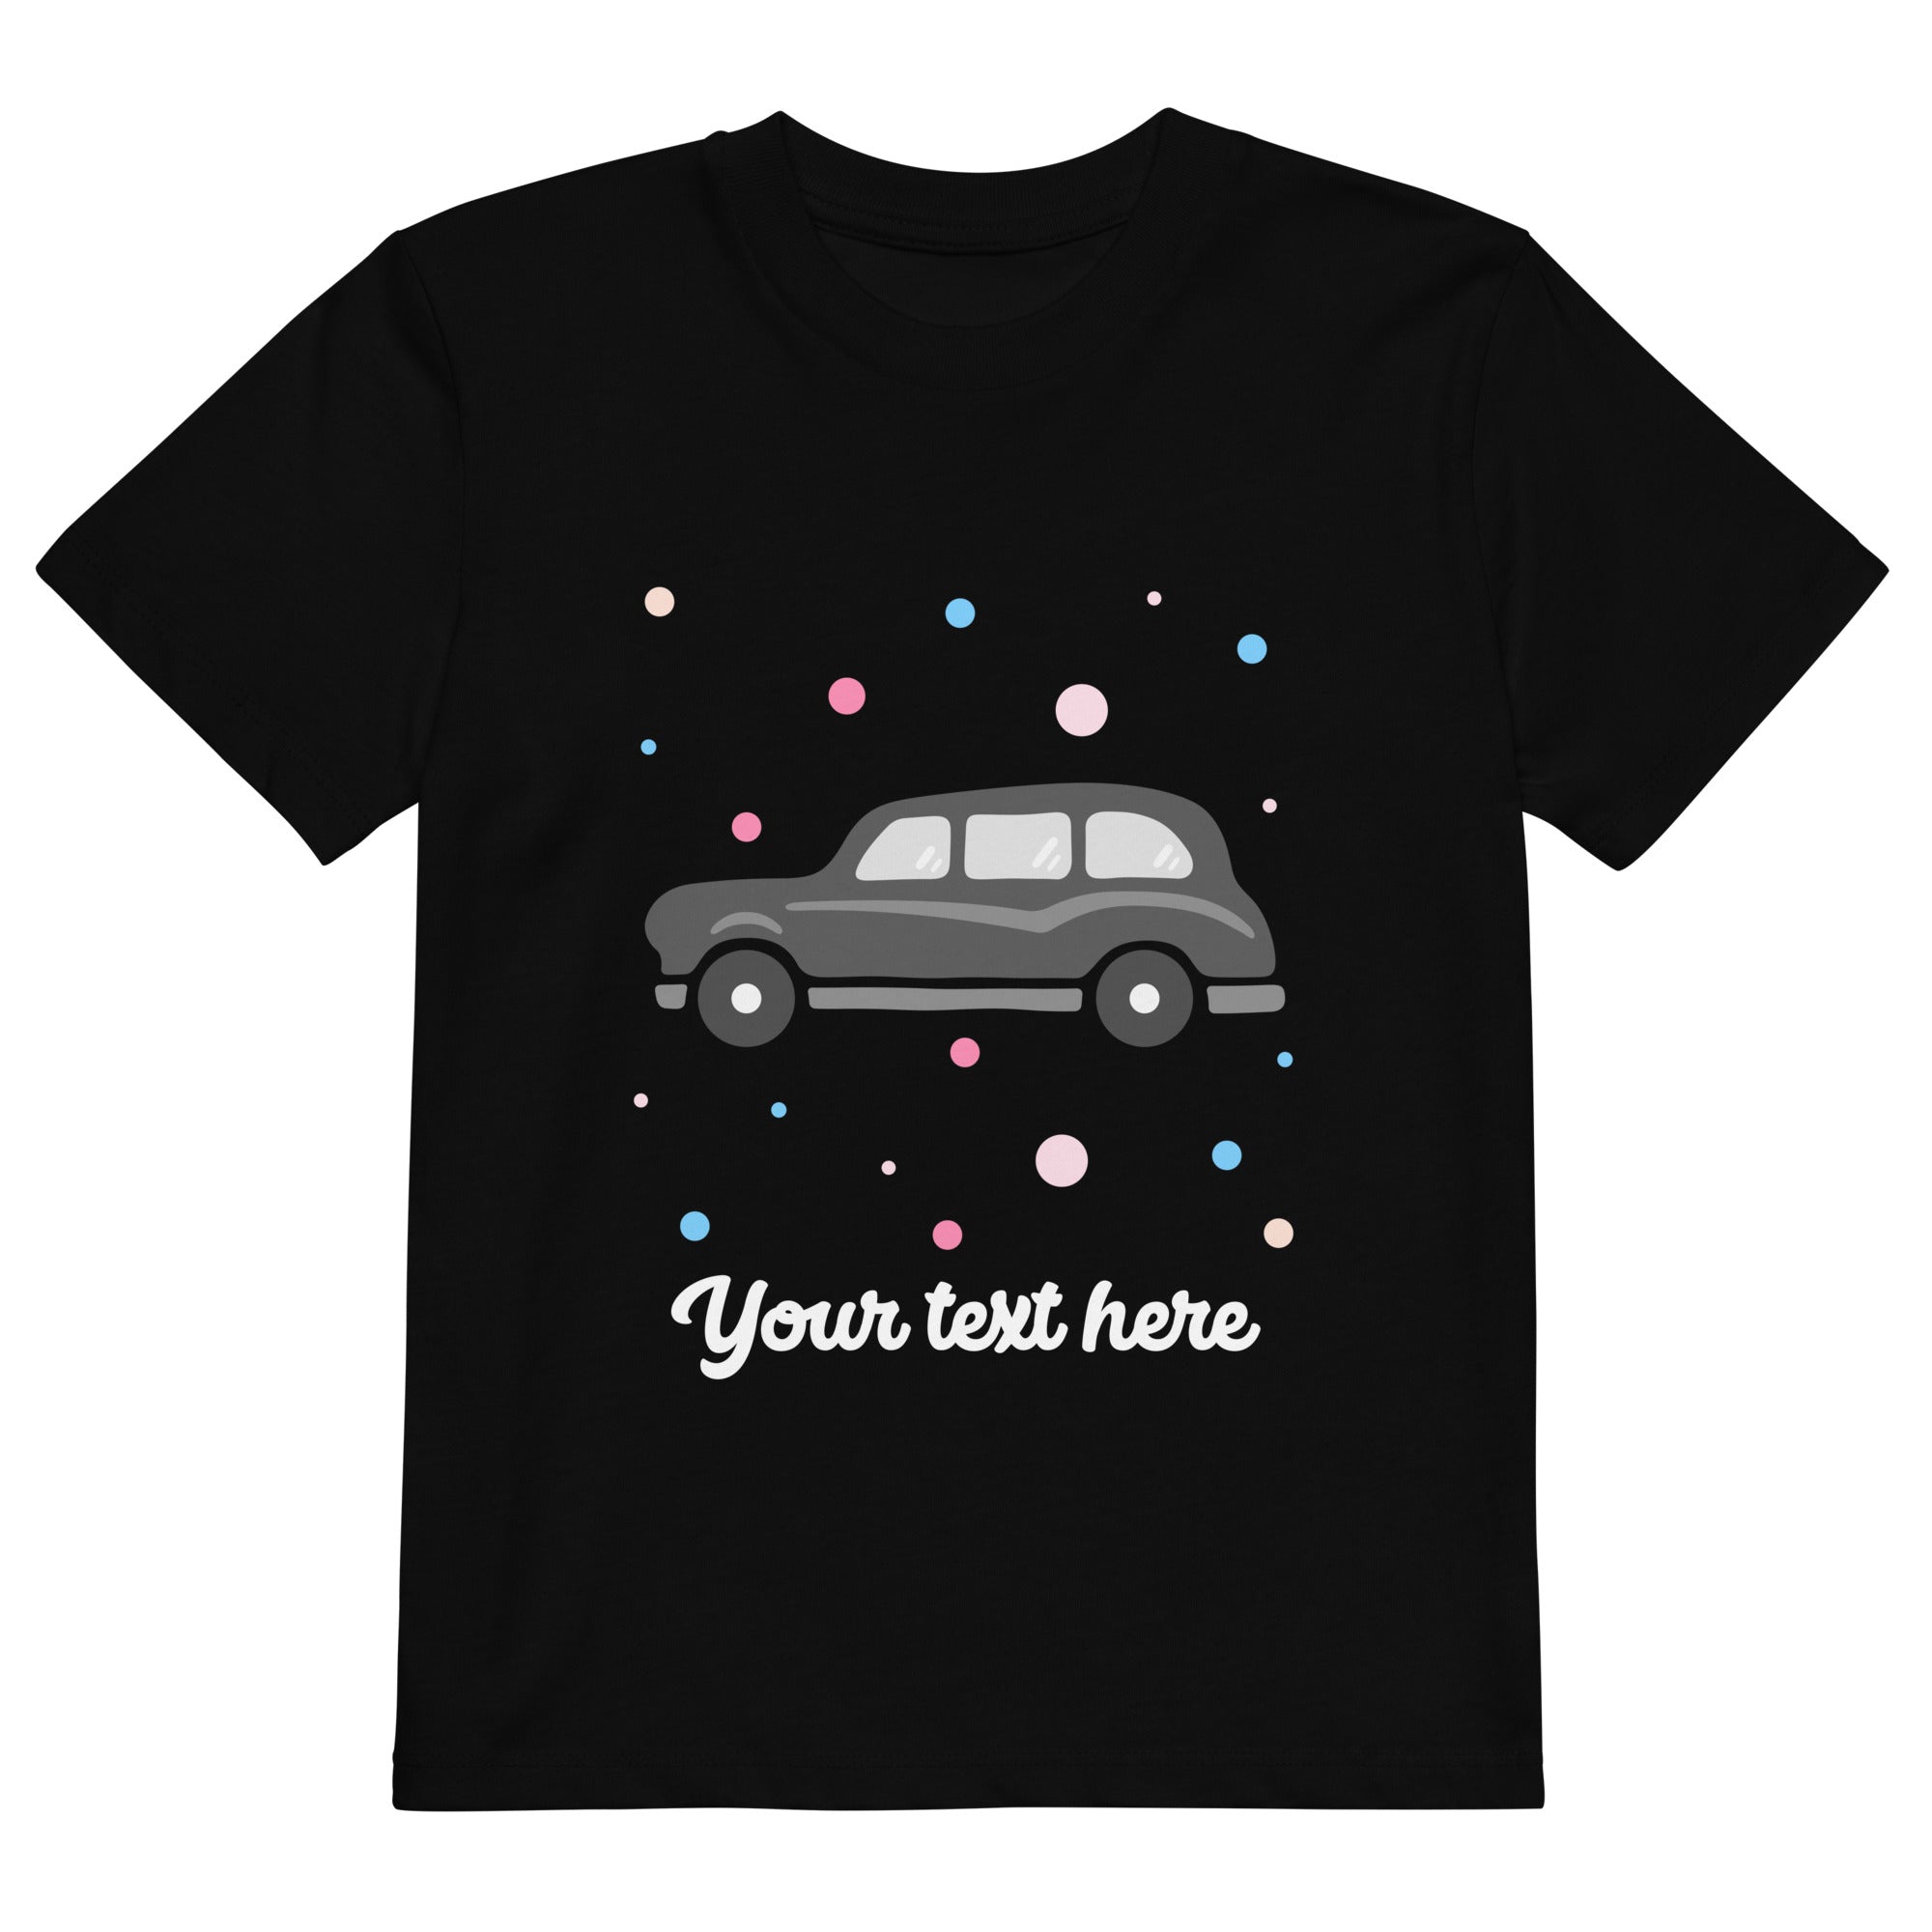 Personalised Custom Text - Organic Cotton Kids T-Shirt - London Doodles - Black Taxi - Black 1